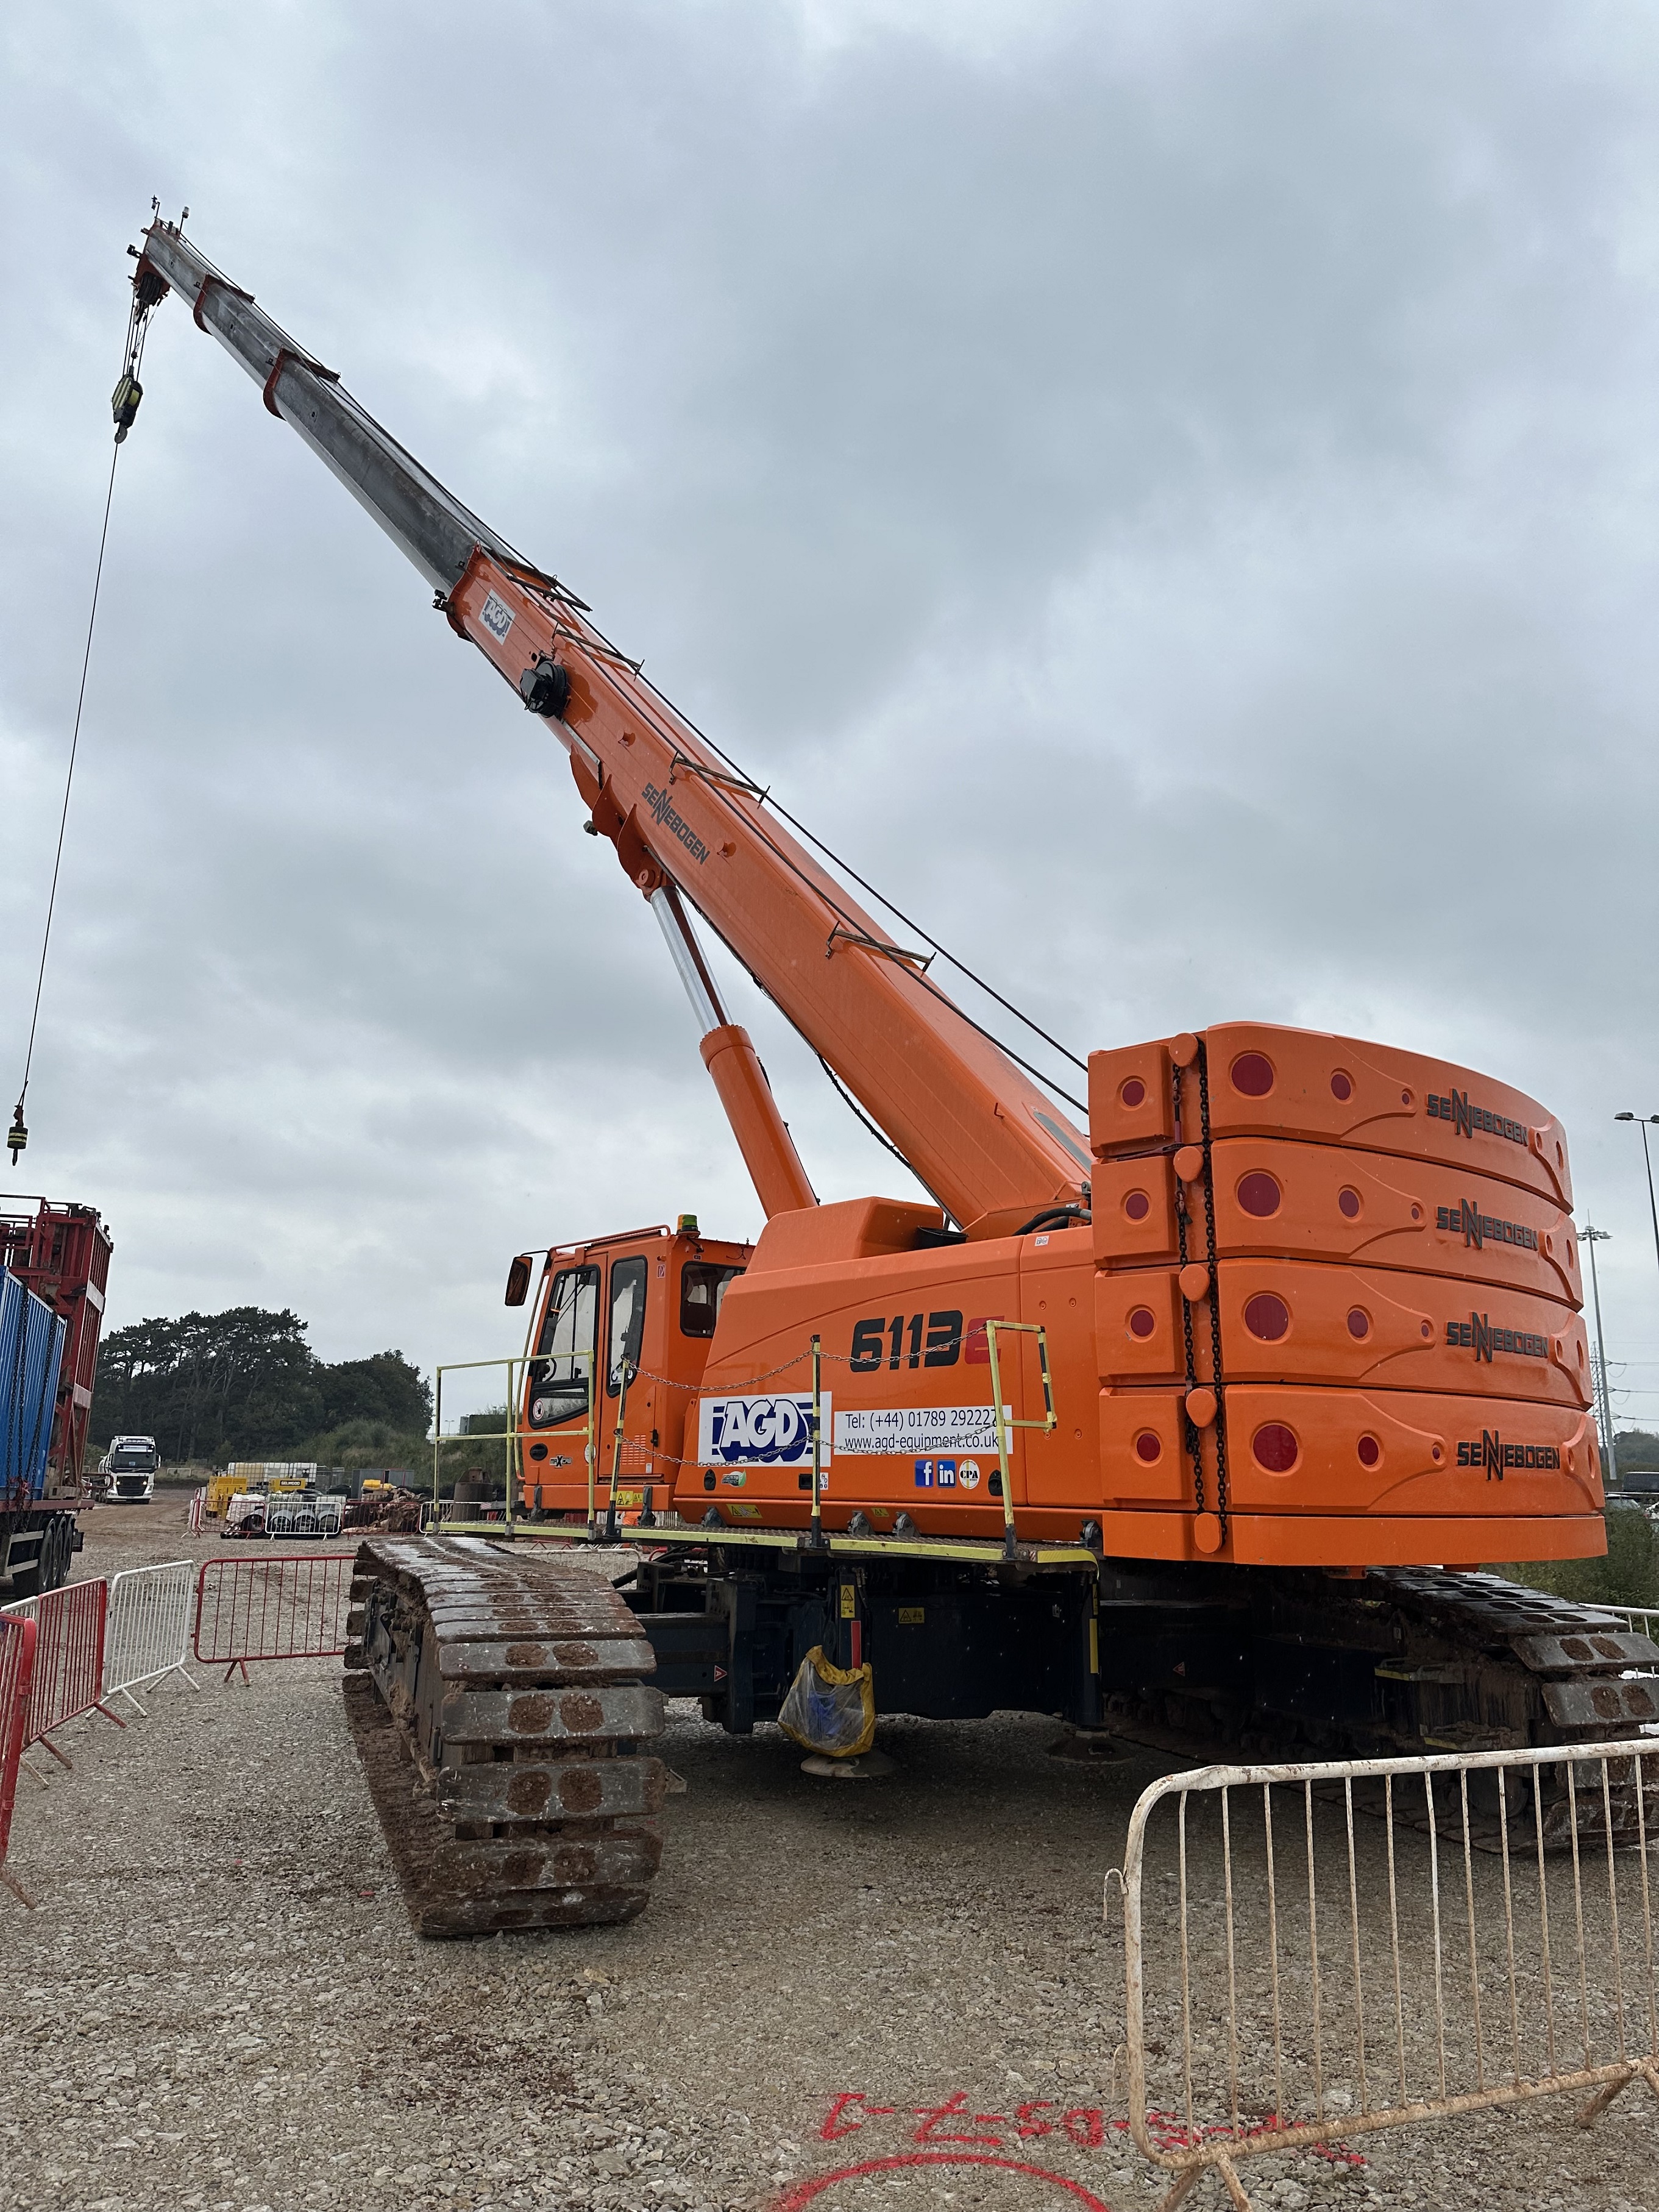 Suppliers of Hydraulic Crawler Crane Rental UK